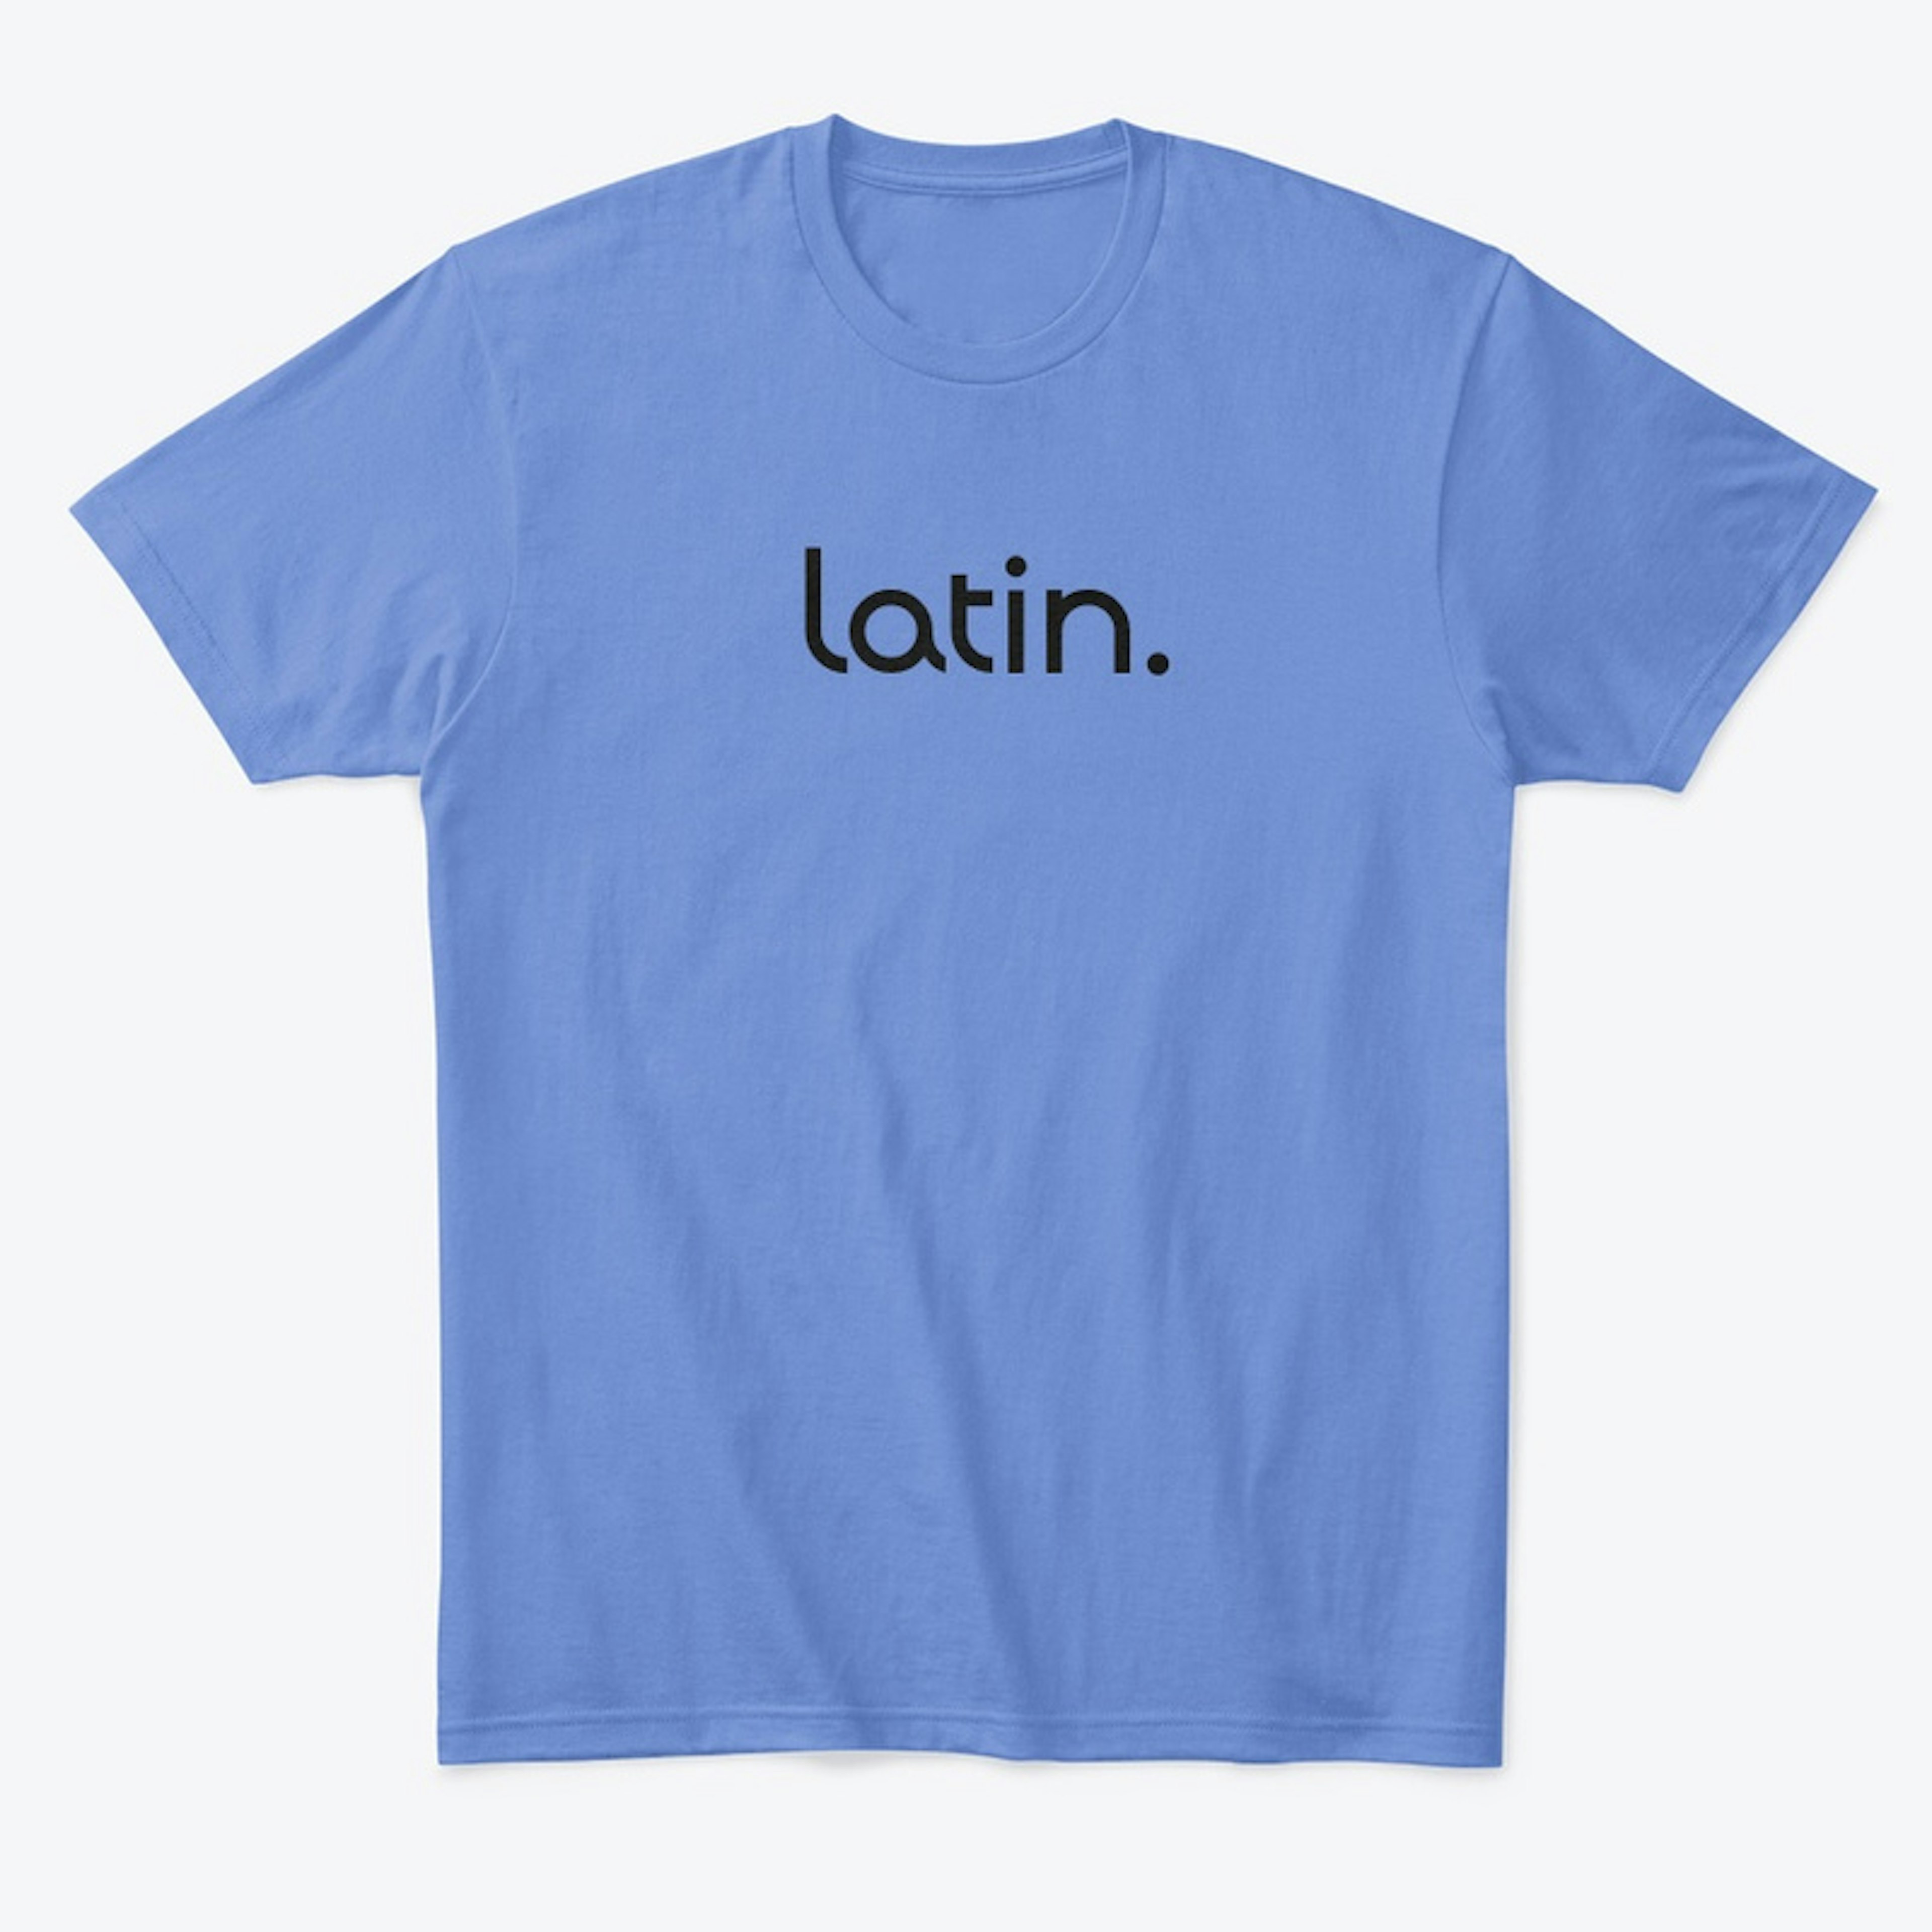 Latin.